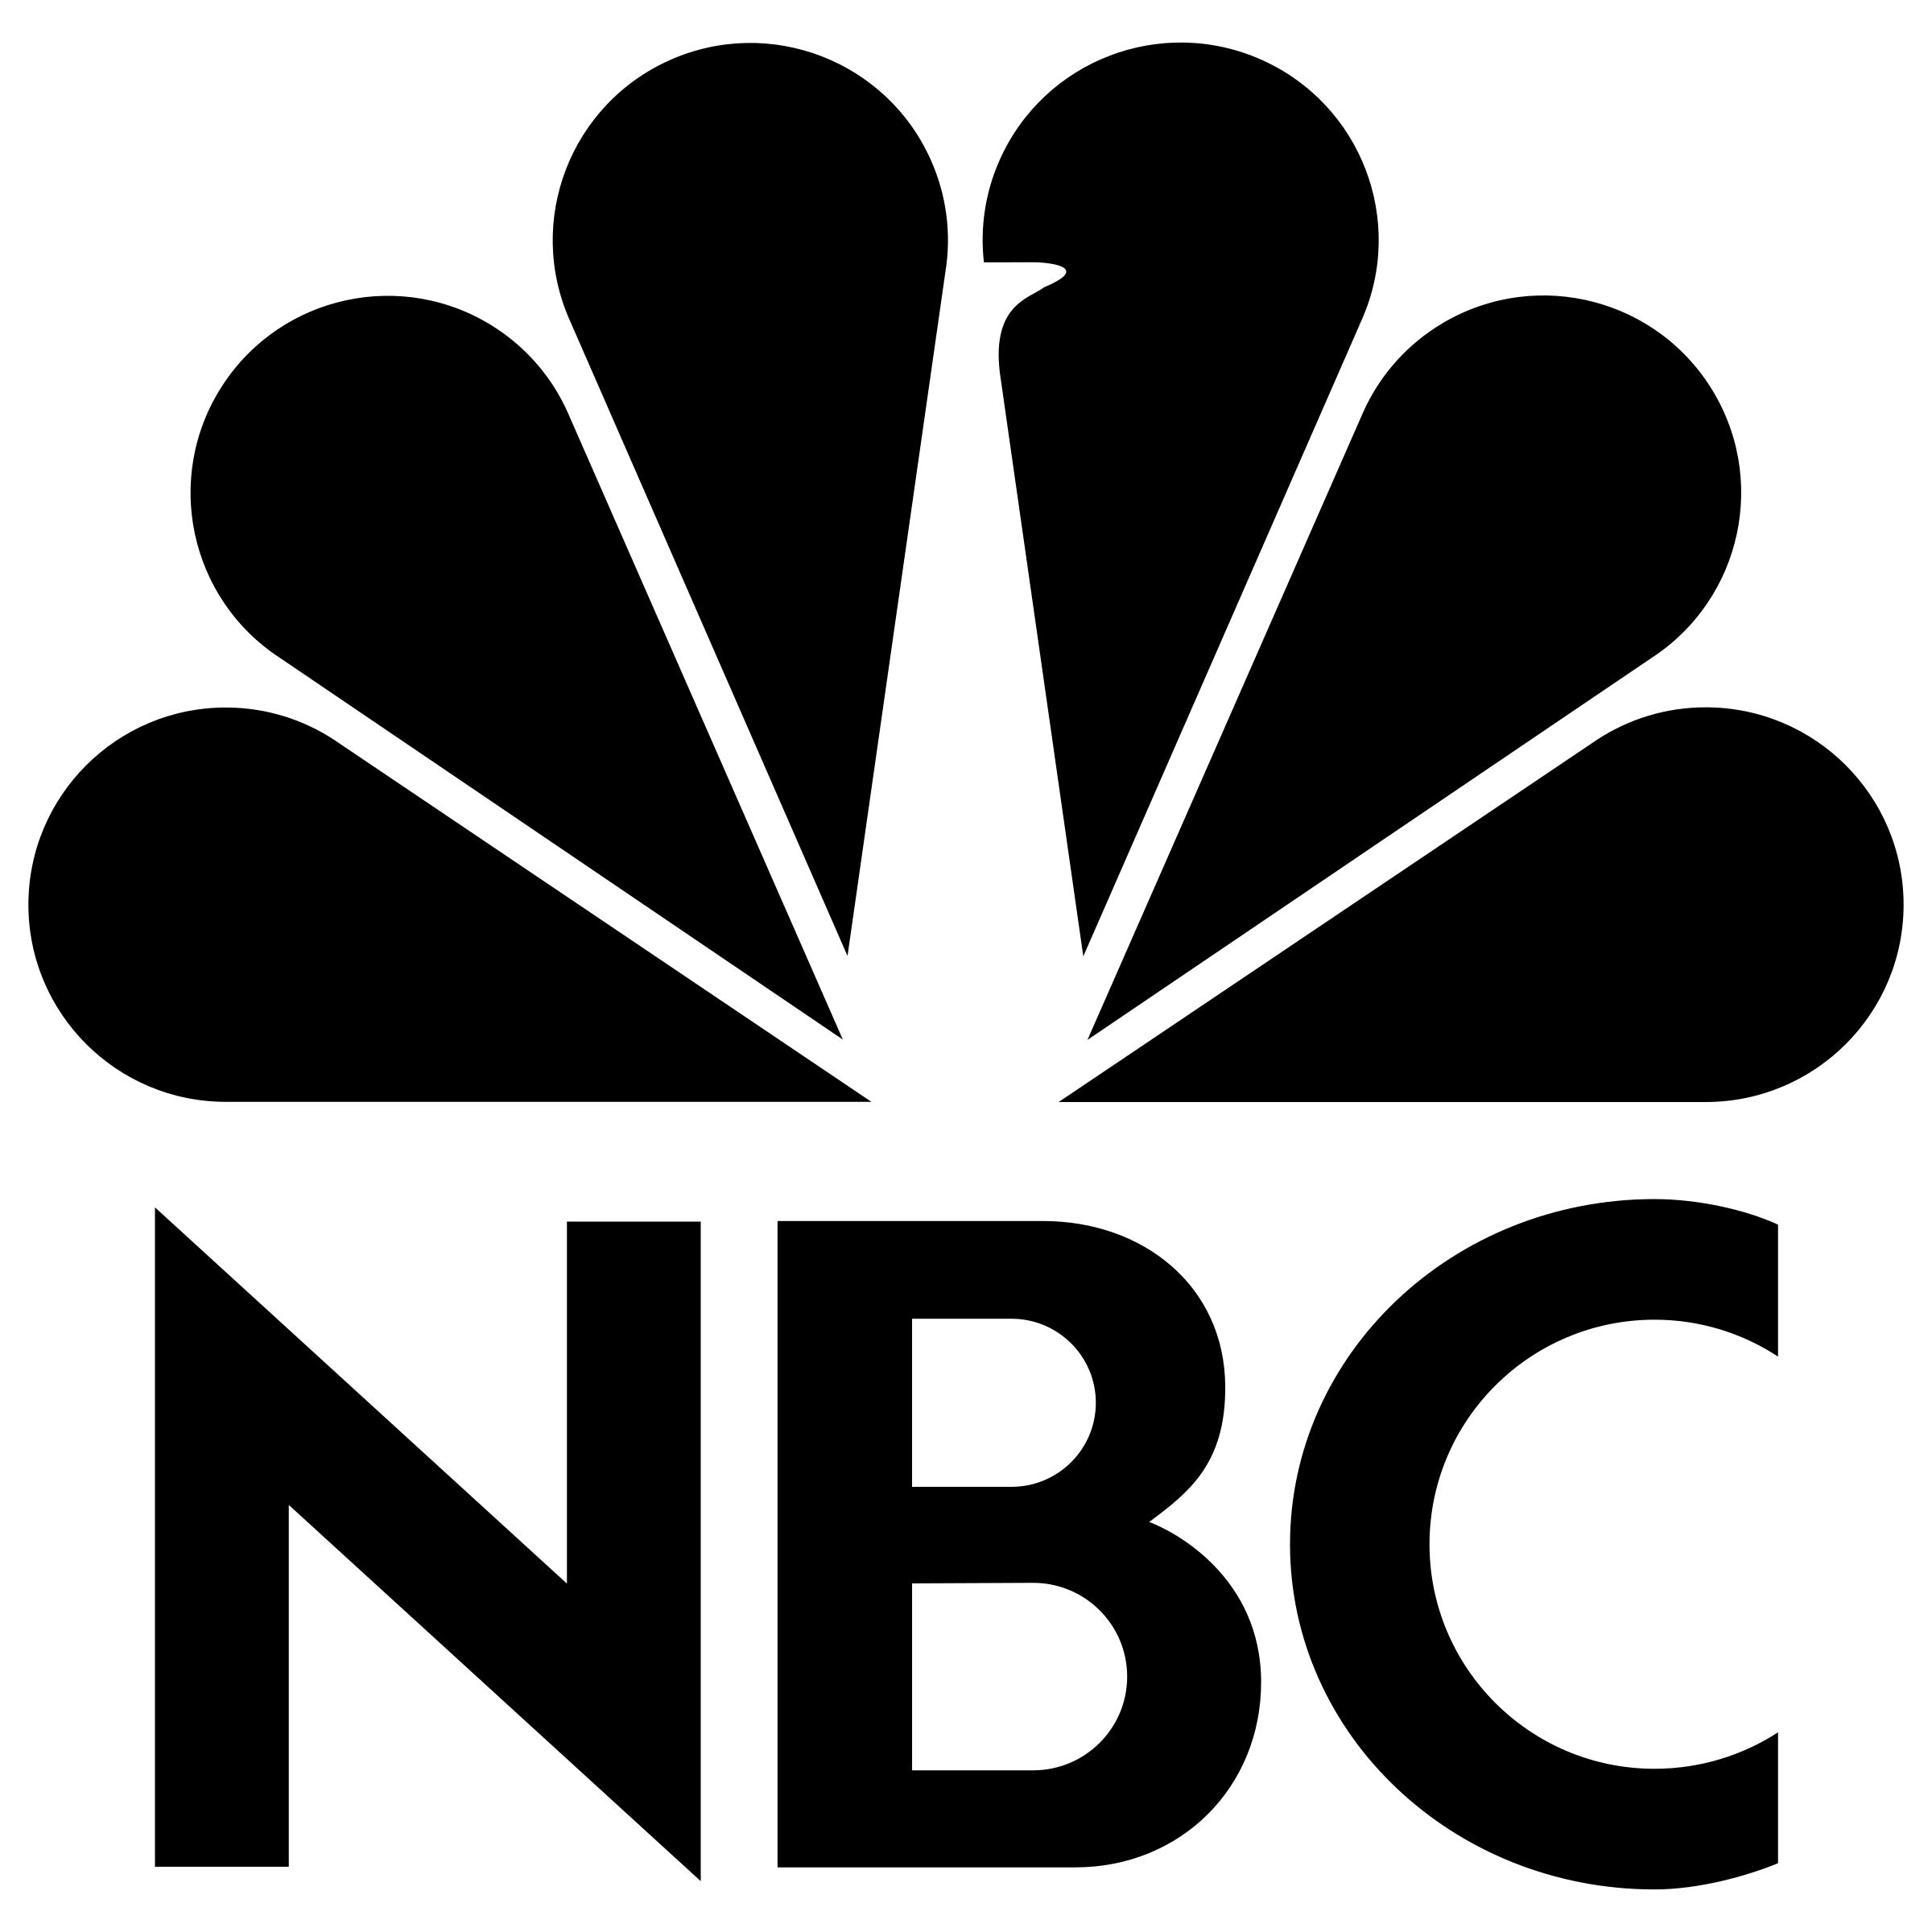 NBC logo in black and white